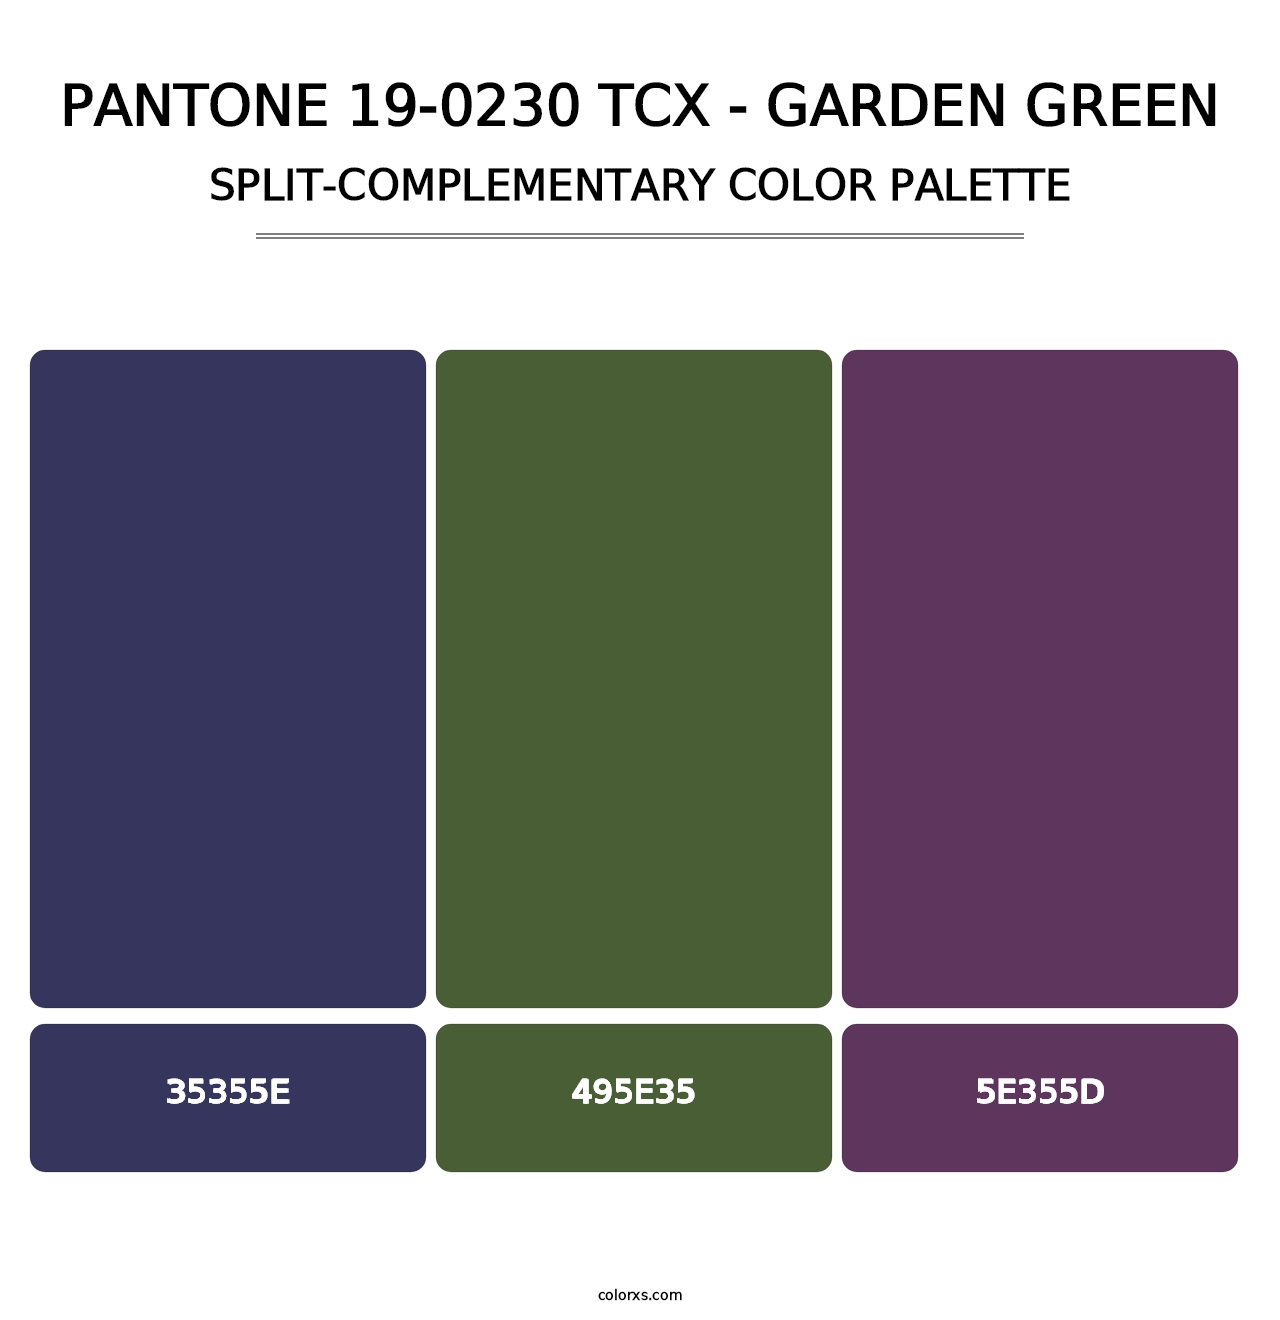 PANTONE 19-0230 TCX - Garden Green - Split-Complementary Color Palette